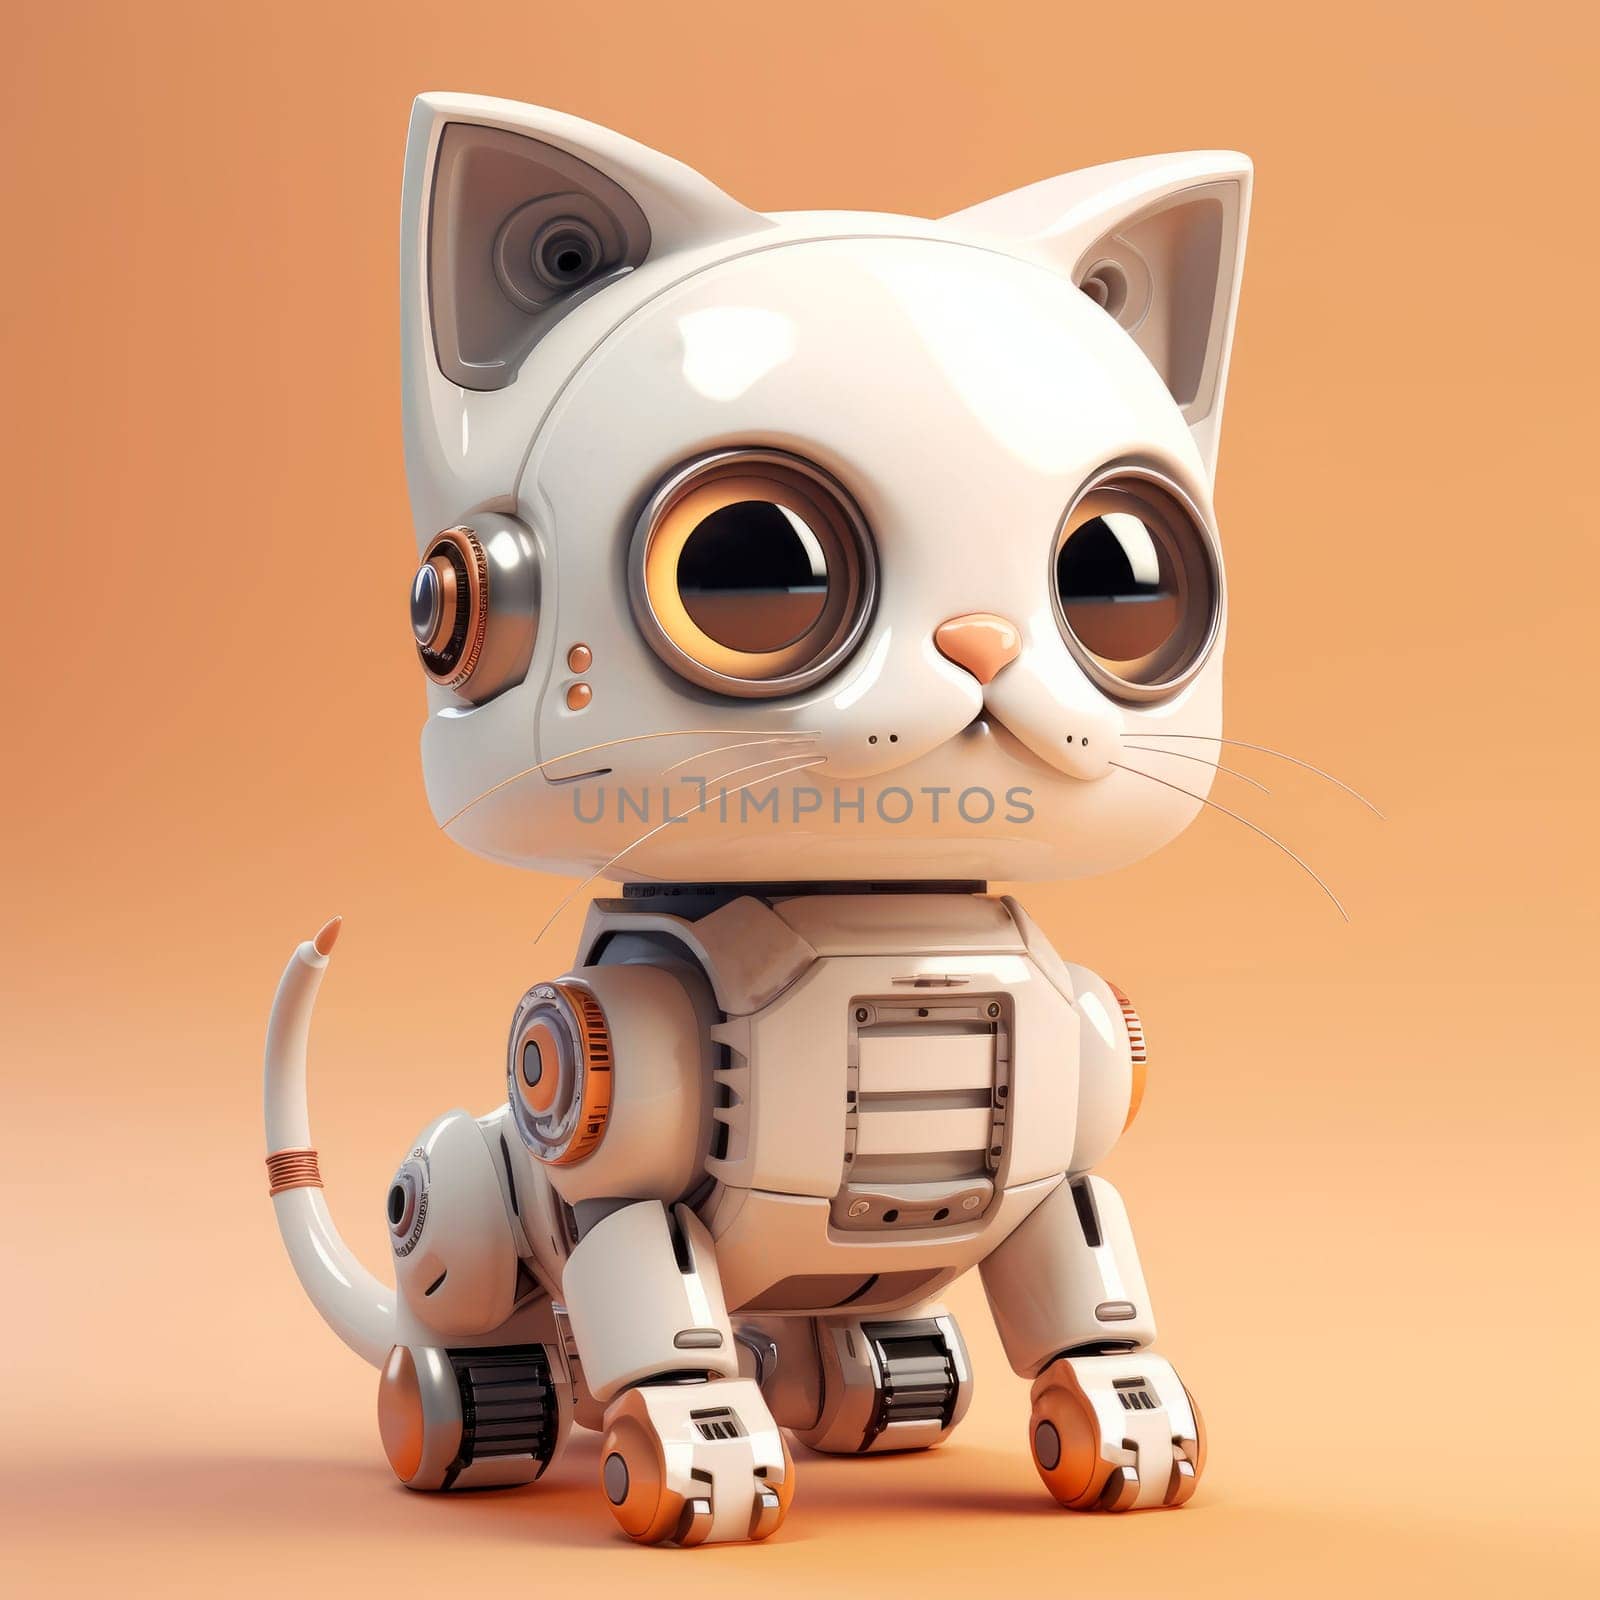 Modern toy robot cat. High quality photo